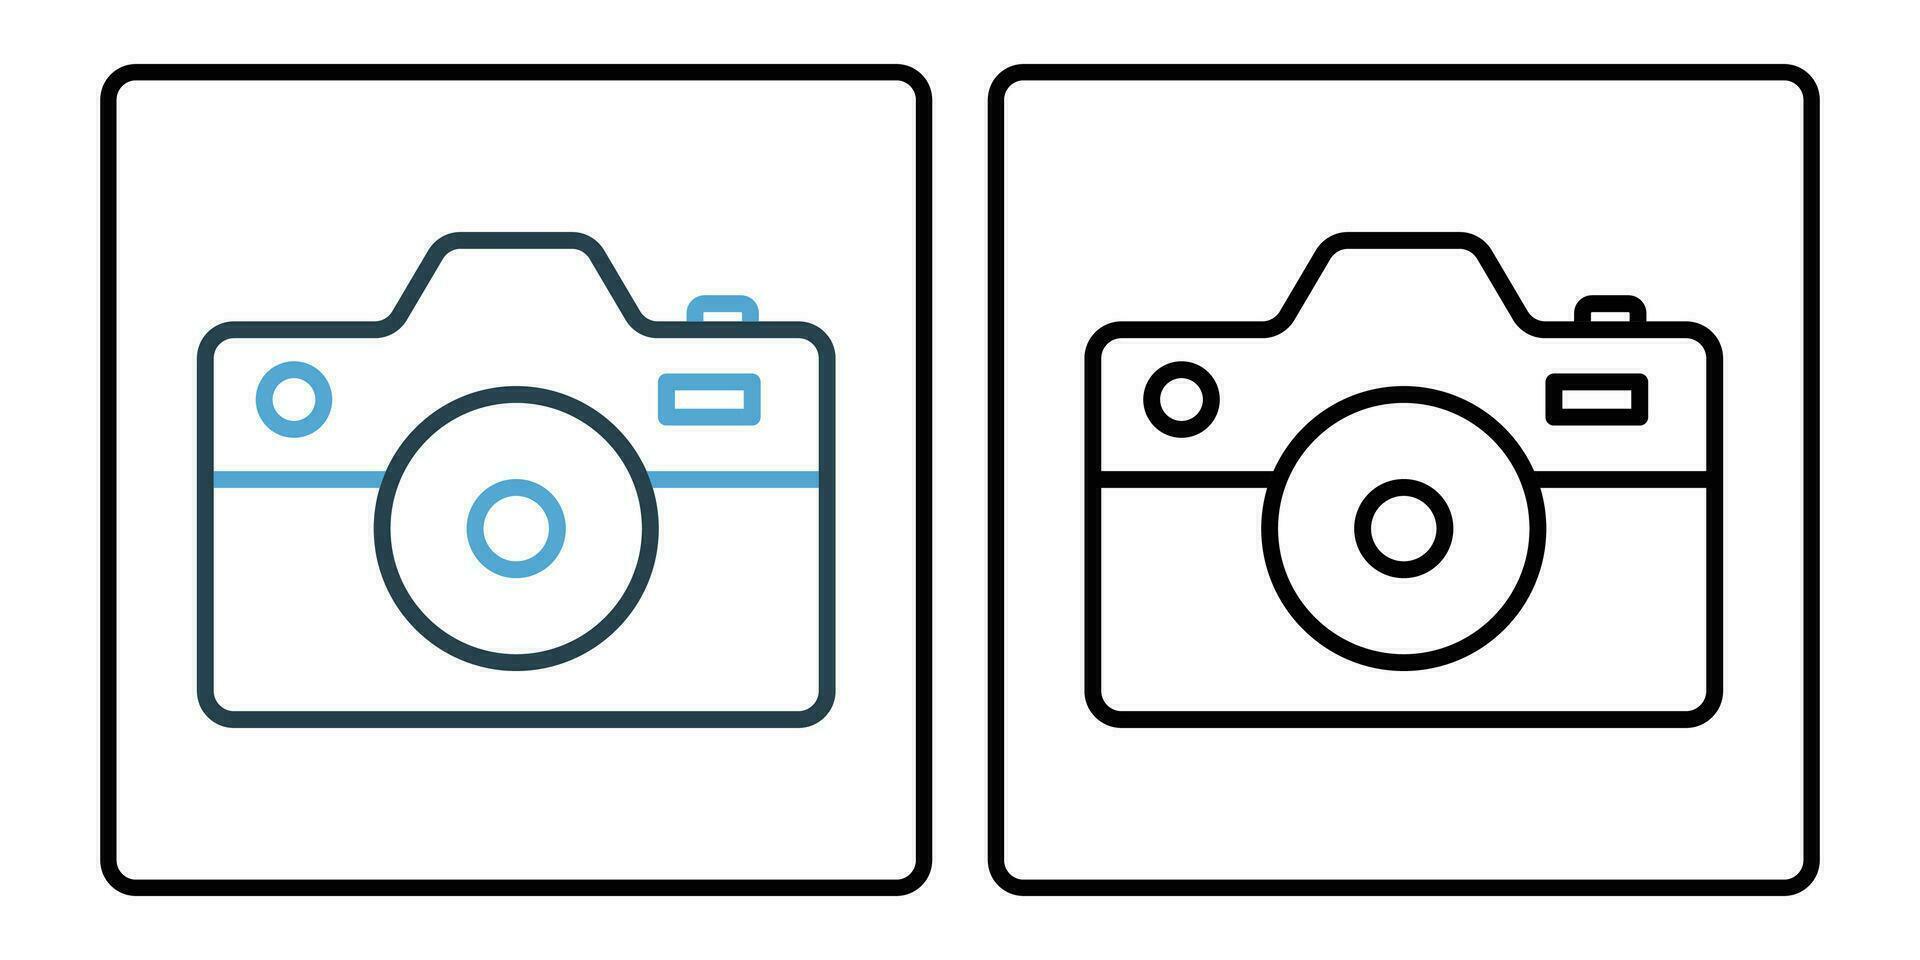 camera icon. line icon style. simple vector design editable